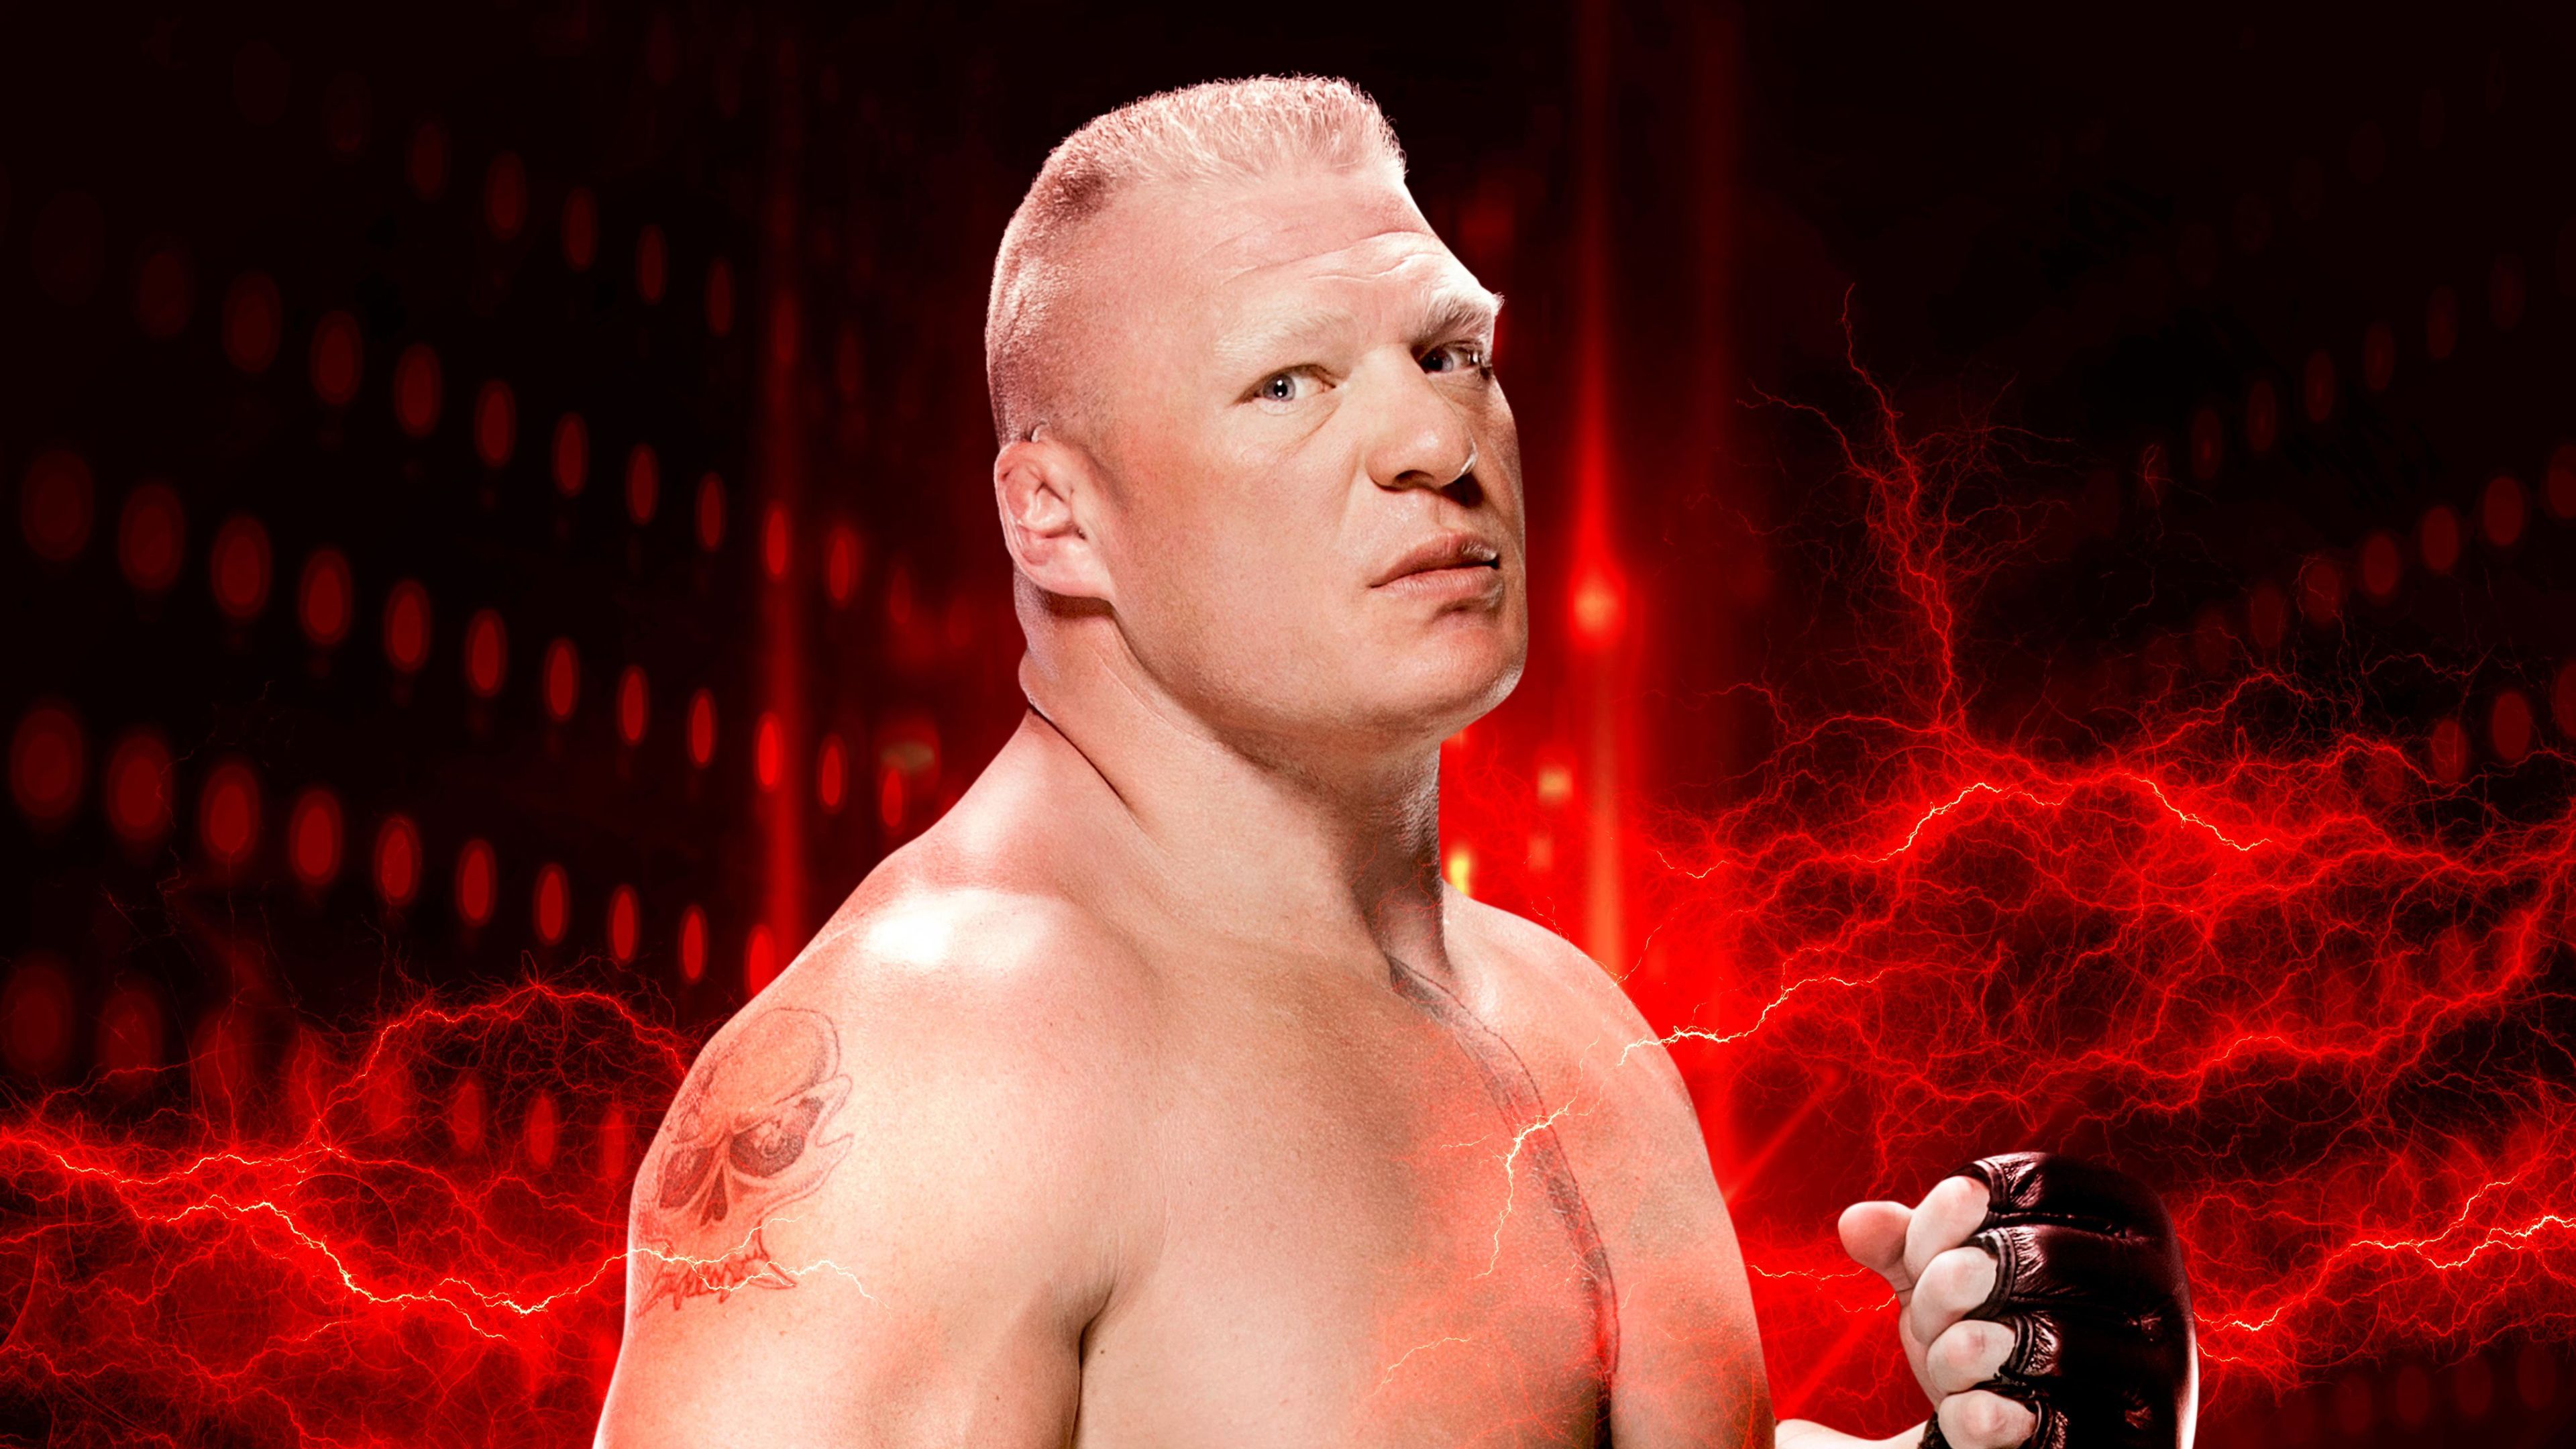 Brock Lesnar WWE 2K19 HD Wallpaper and Background Image